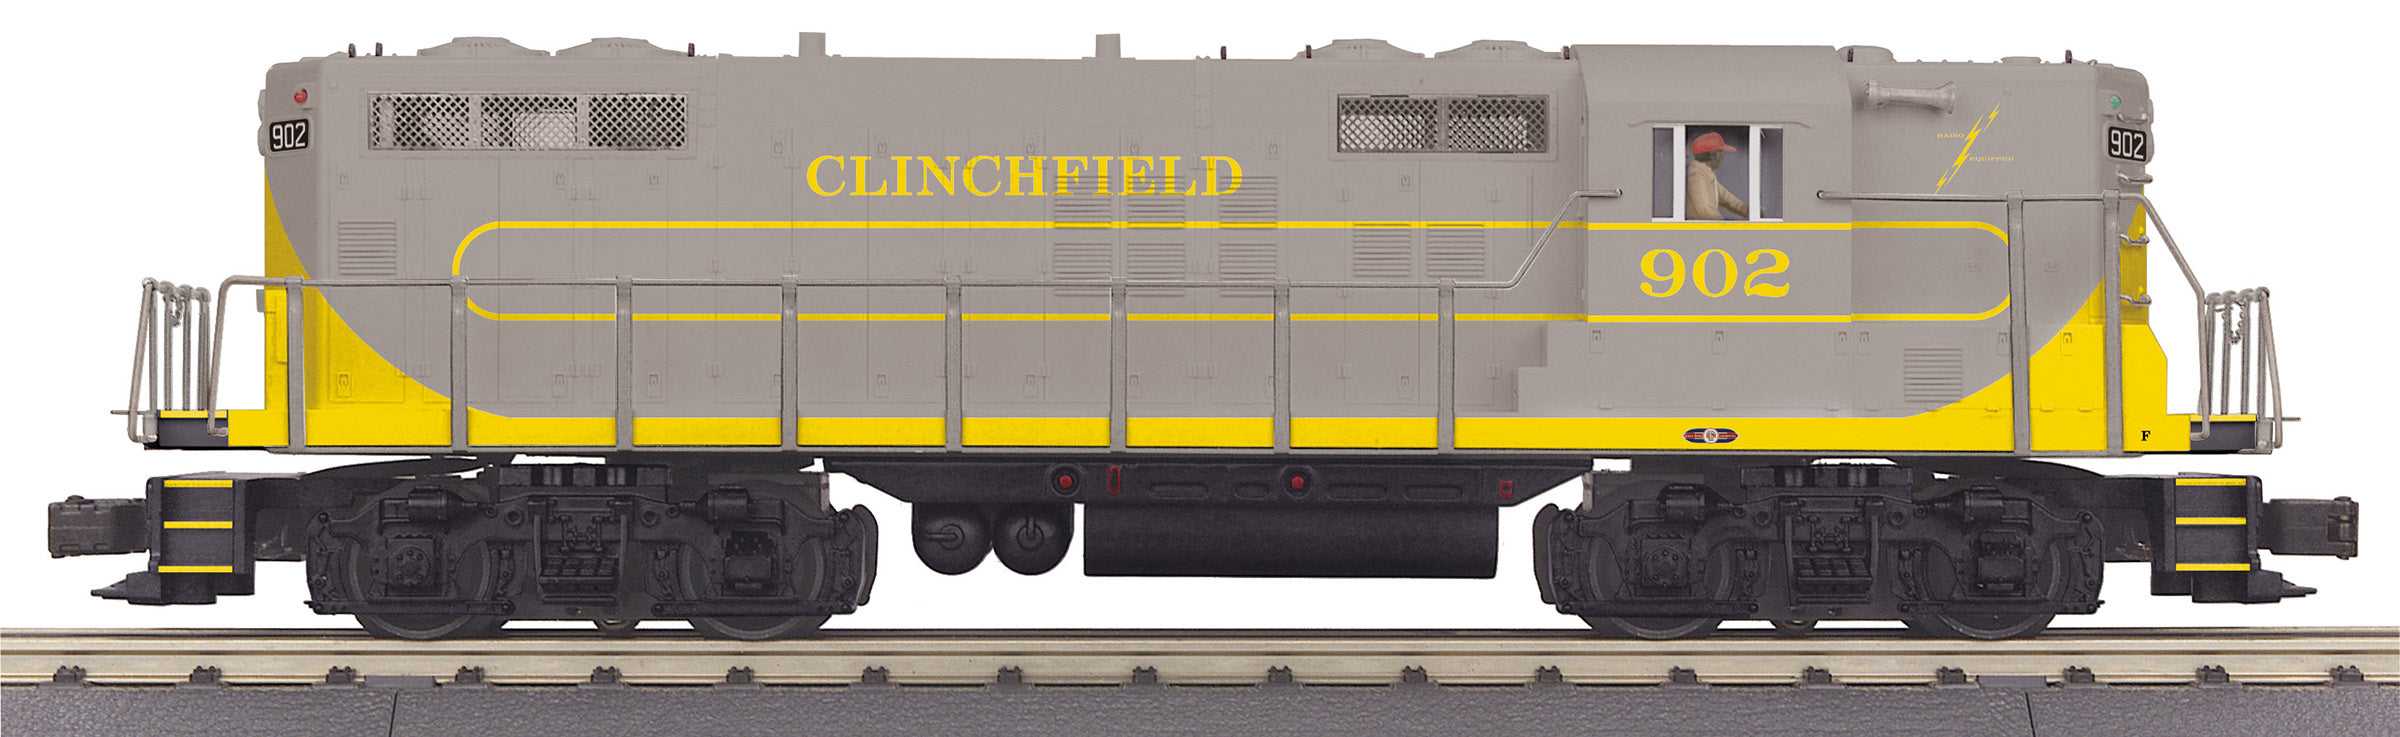 MTH 20-21536-1 - GP-7 Diesel Engine "Clinchfield" w/ PS3 #902 - Custom Run for MrMuffin'sTrains